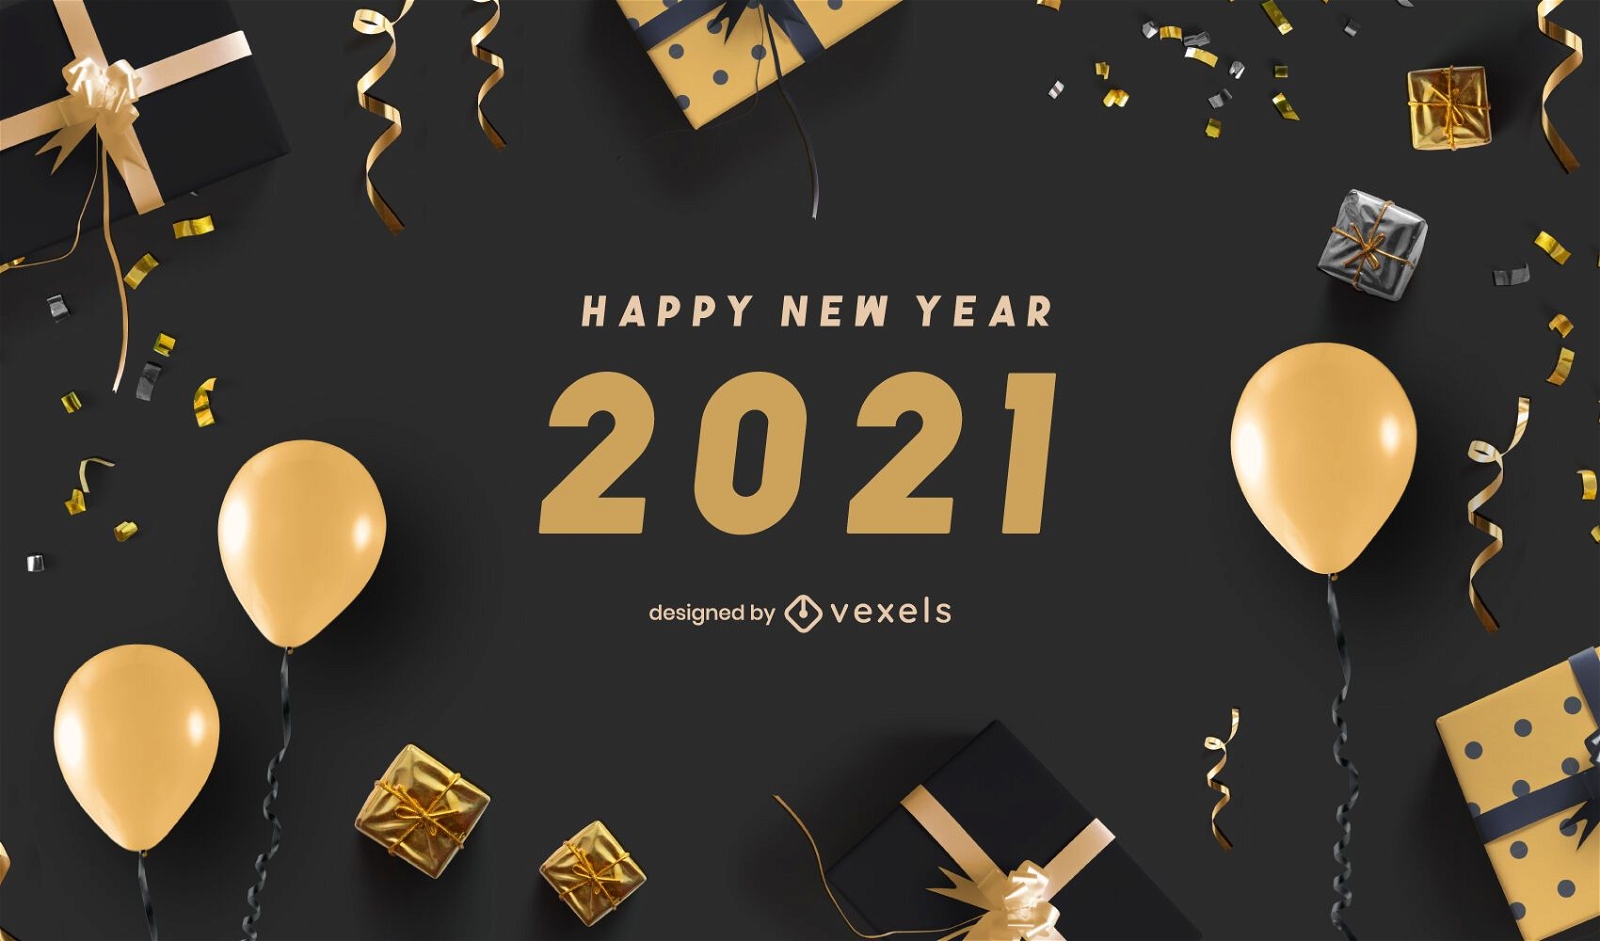 Feliz ano novo 2021 background design